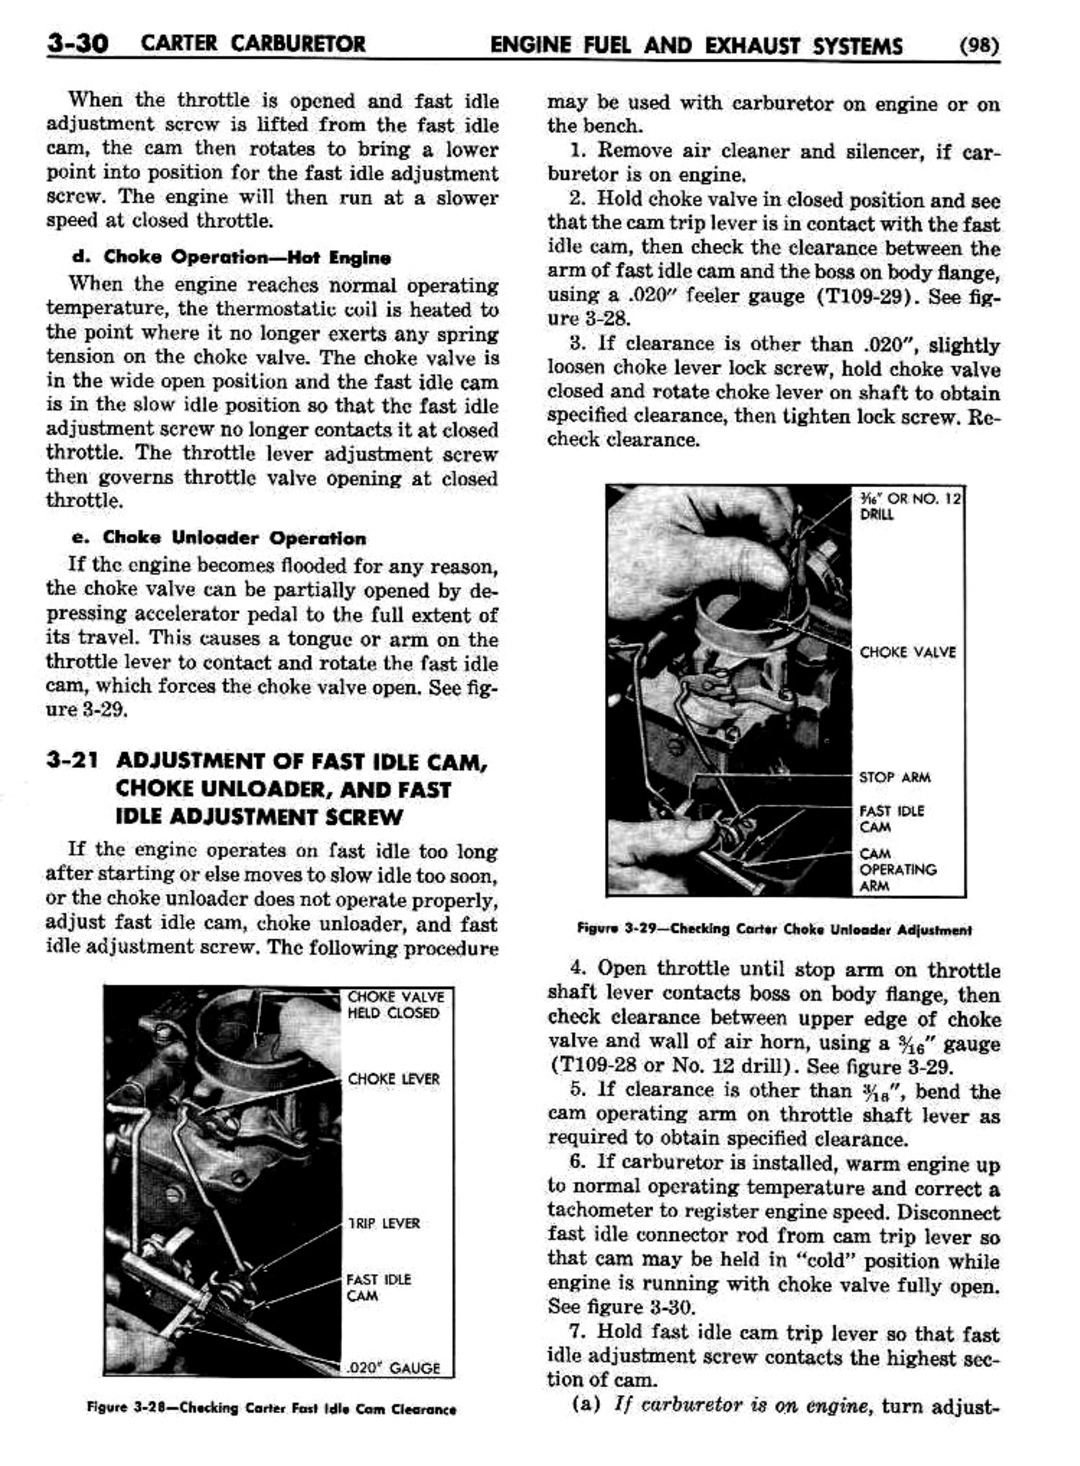 n_04 1951 Buick Shop Manual - Engine Fuel & Exhaust-030-030.jpg